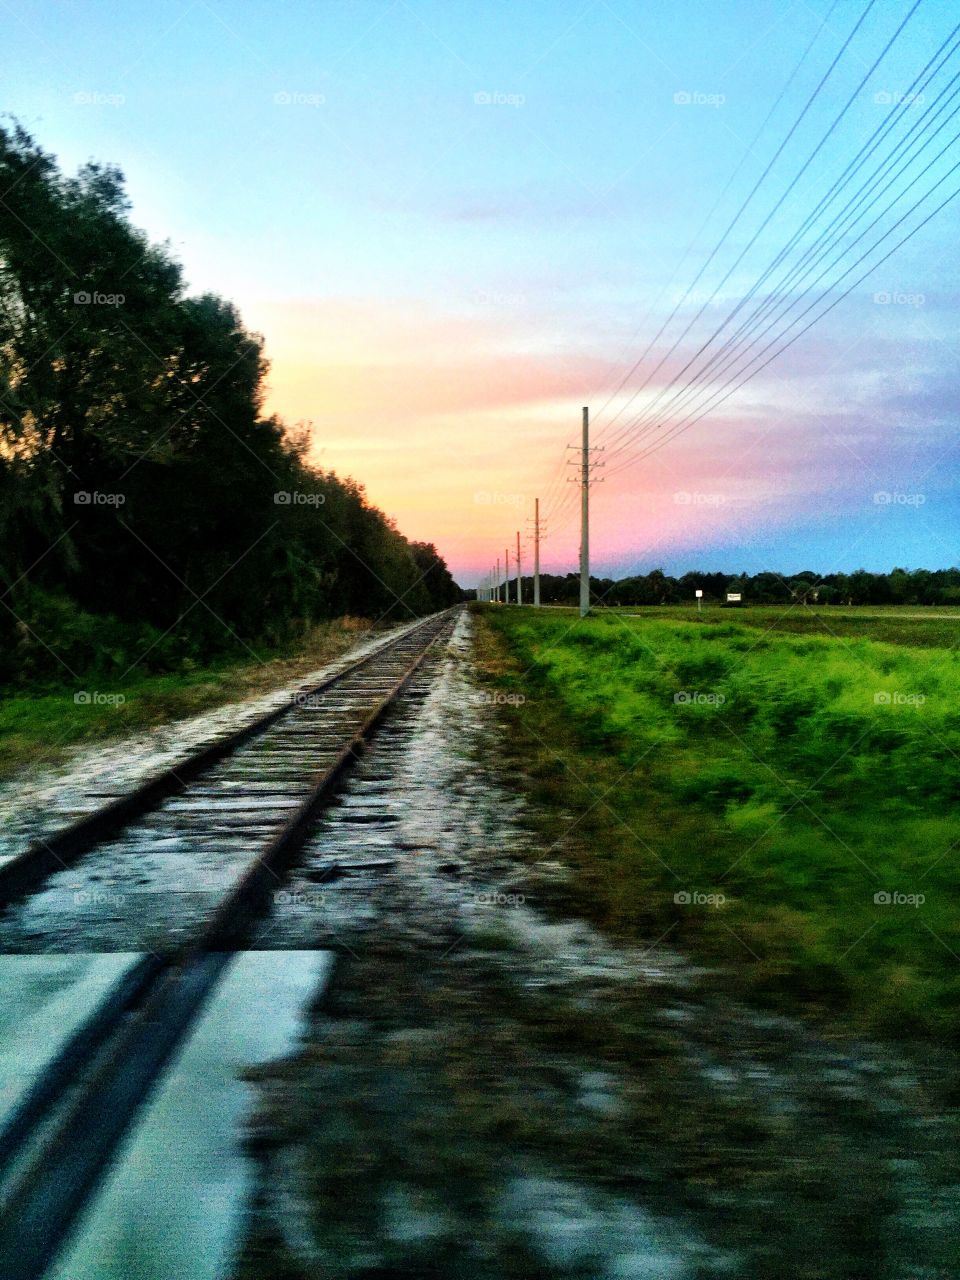 Sunset over train tracks 